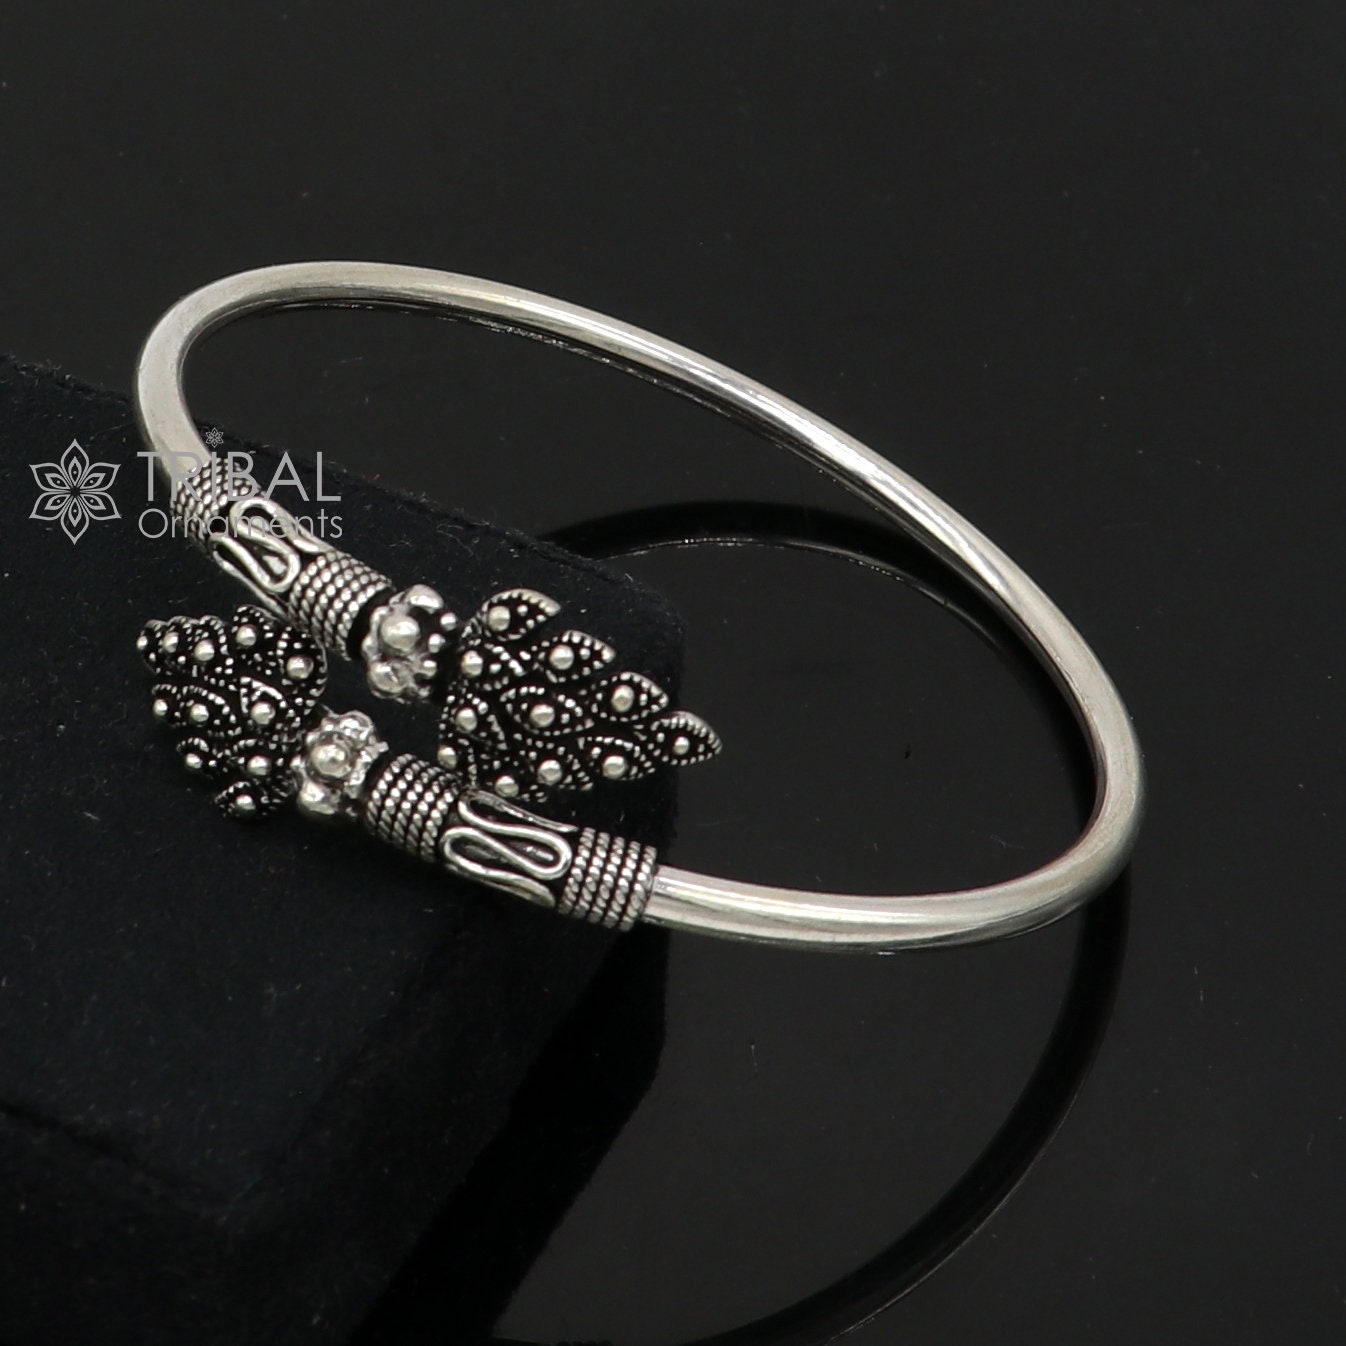 Peacock feather design 925 sterling silver cuff bracelet kada for girl's women's silver jewelry cuff238